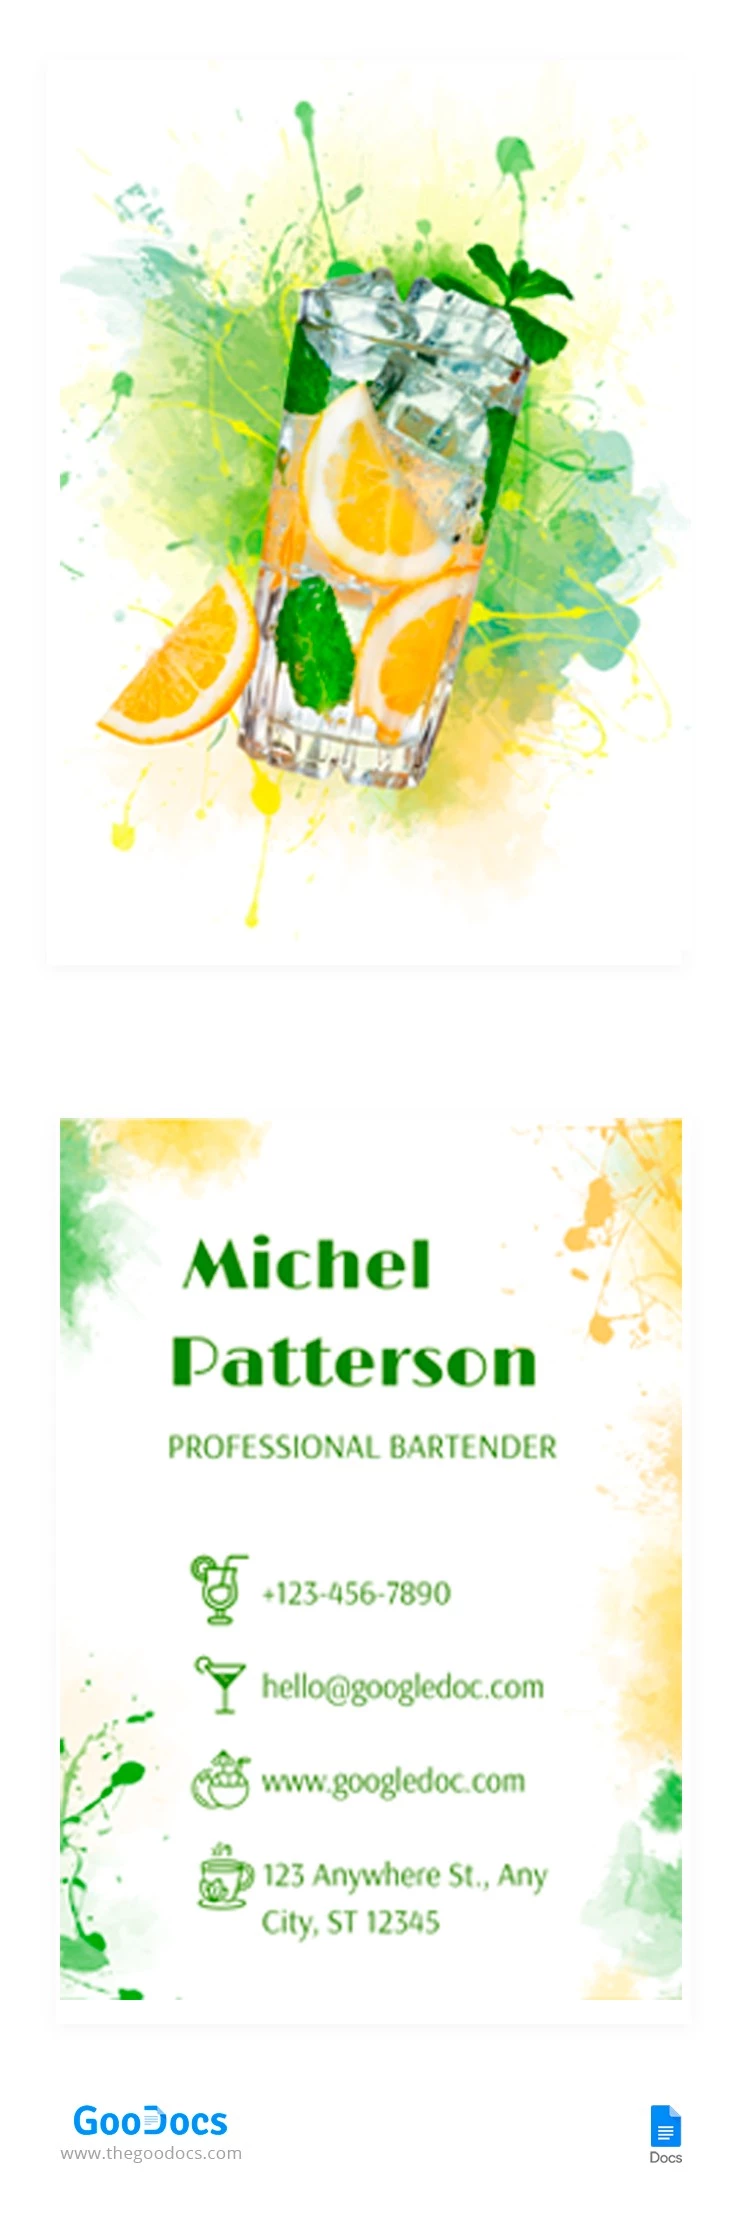 Tarjeta de presentación de barman colorida - free Google Docs Template - 10065173